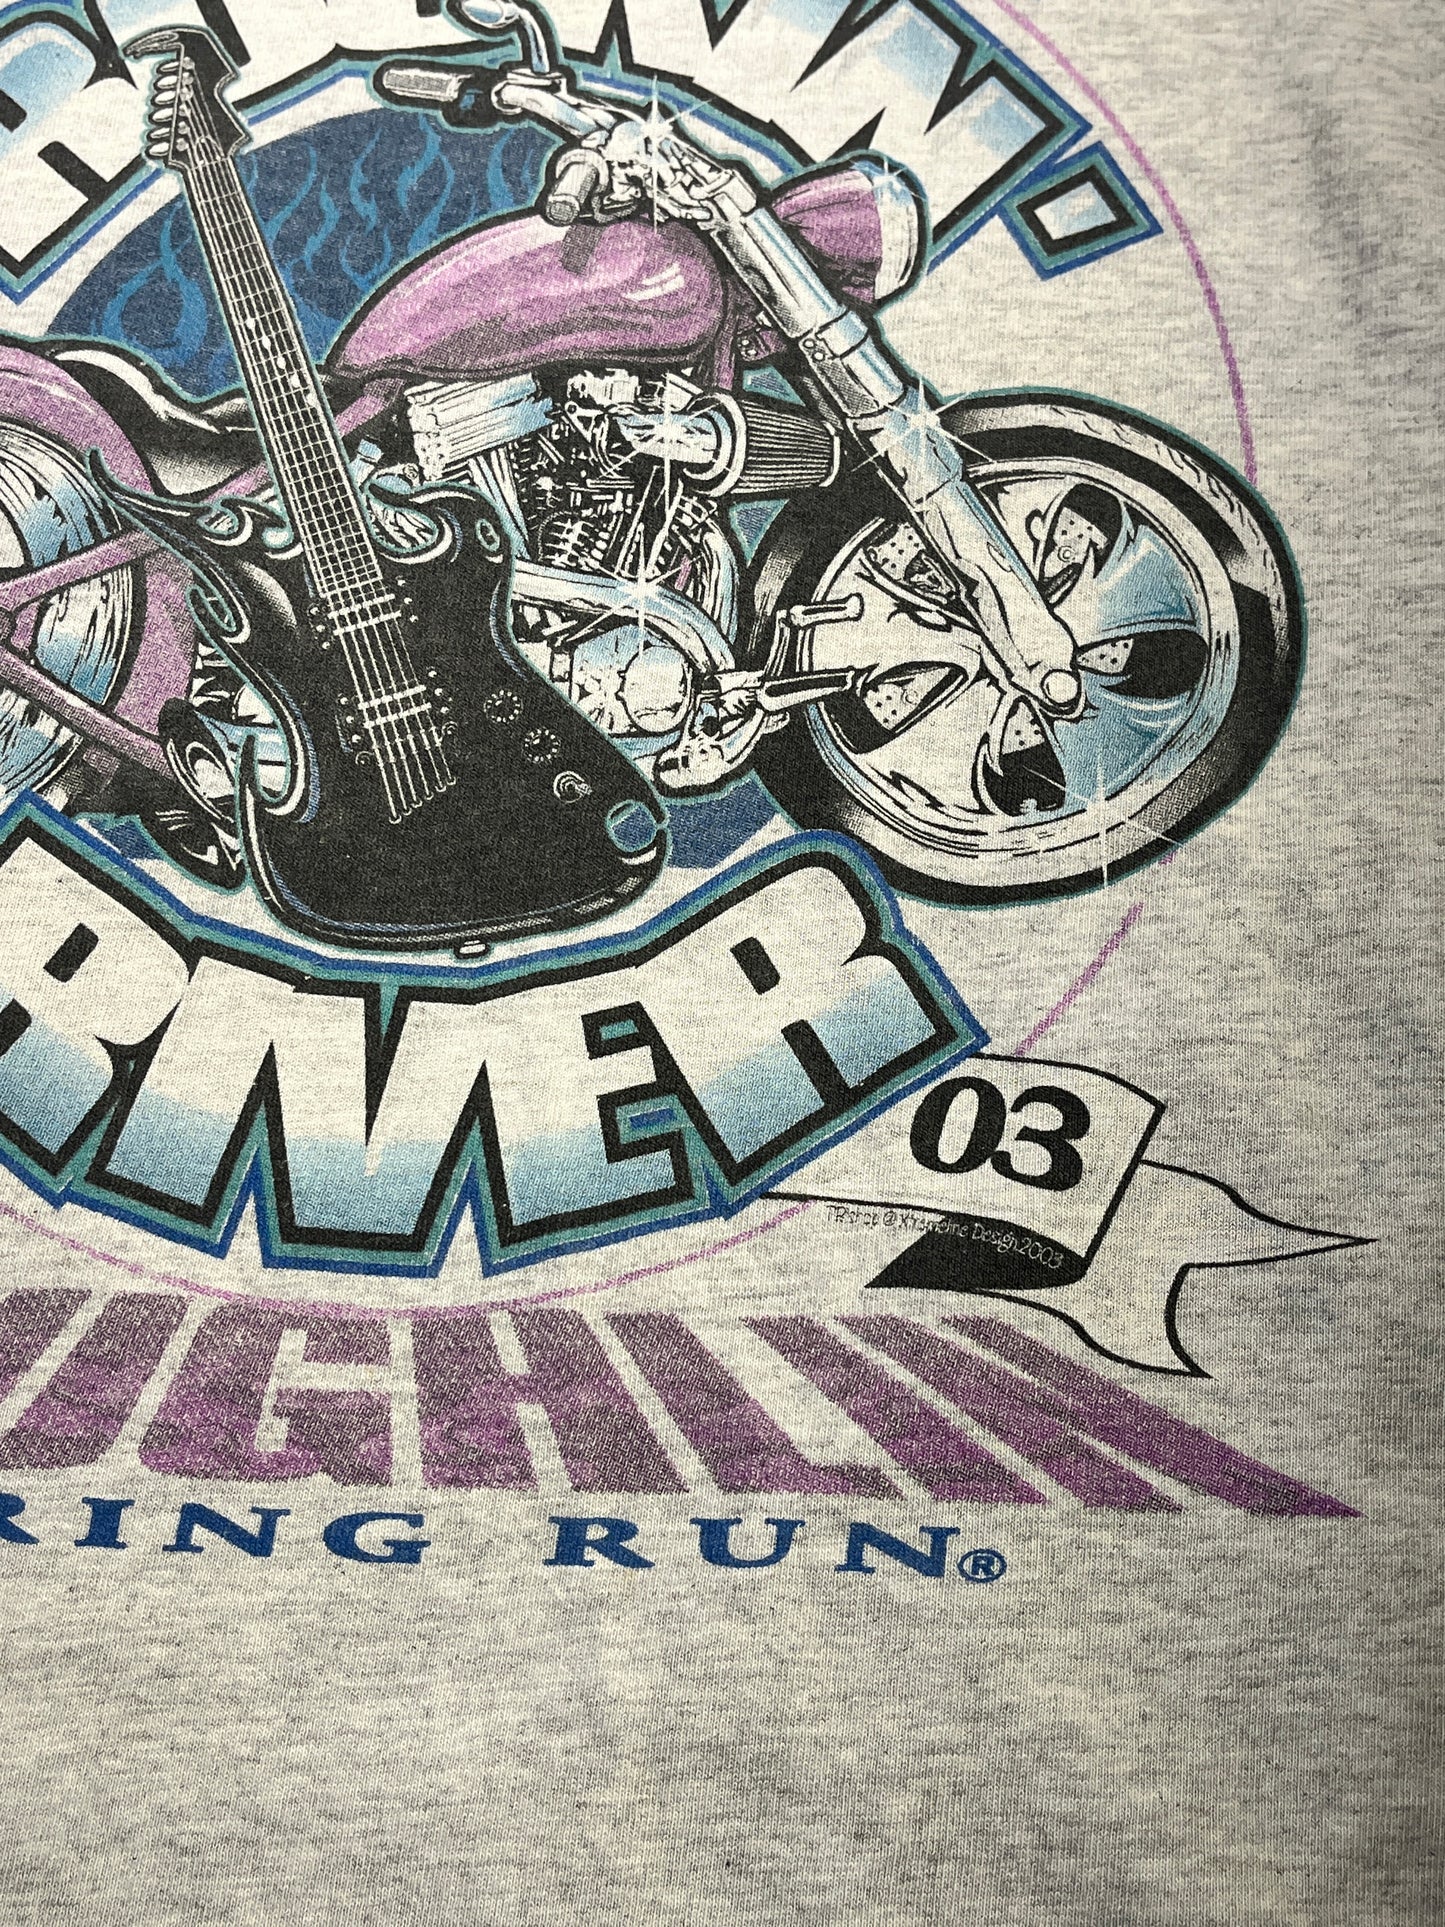 Vintage Biker T-Shirt 2003 River Run Rockin River